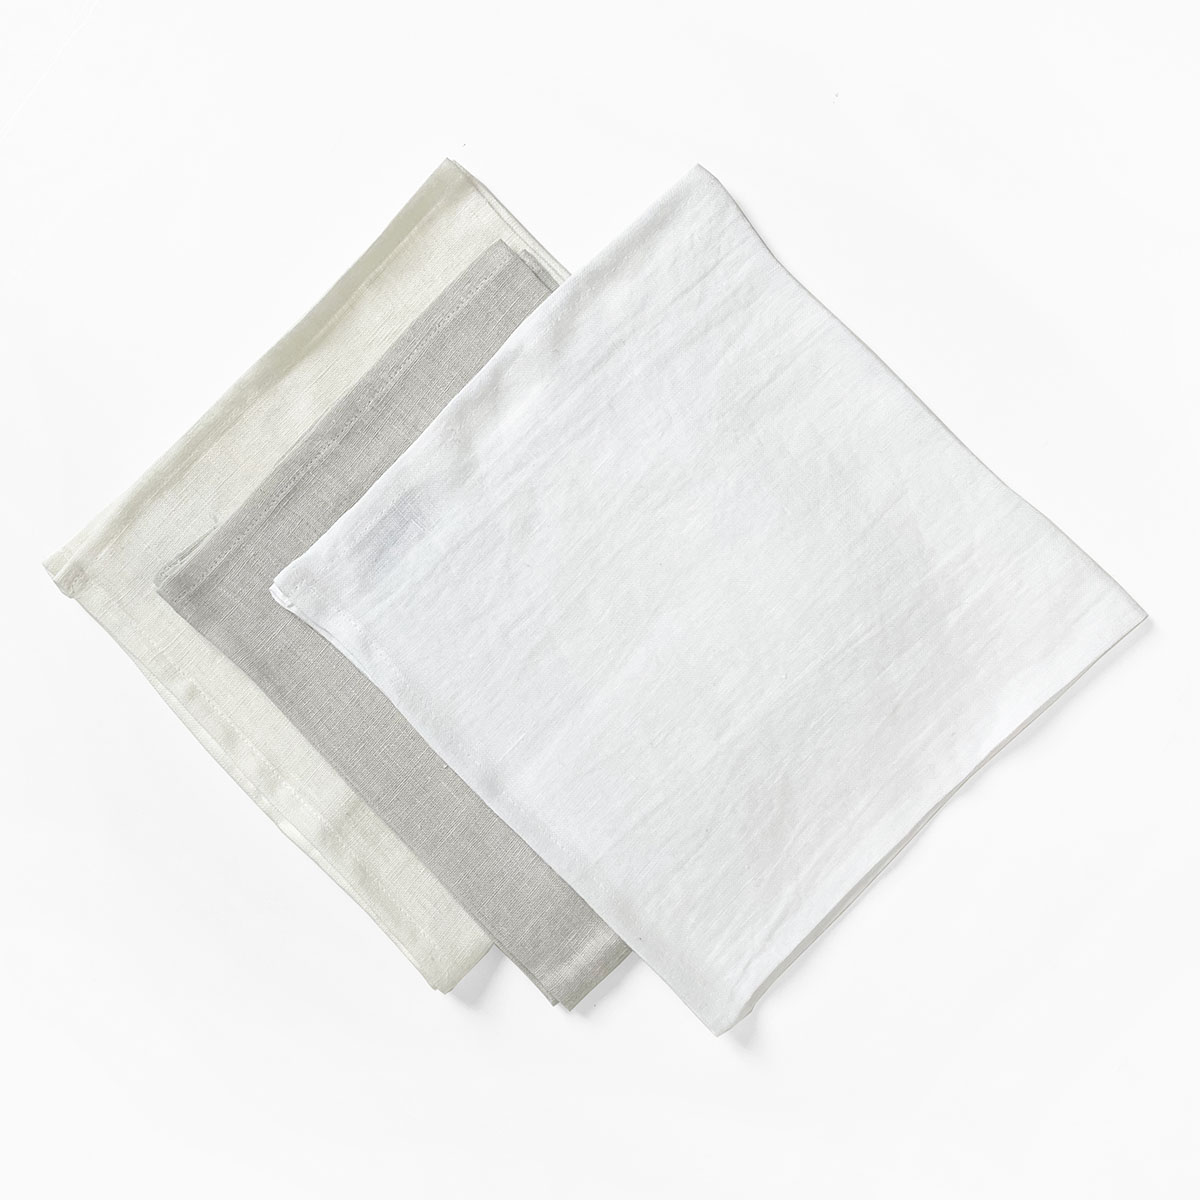 https://maydel.com/wp-content/uploads/stitchable-natural-linen-napkins-white-ivory-beige.jpg